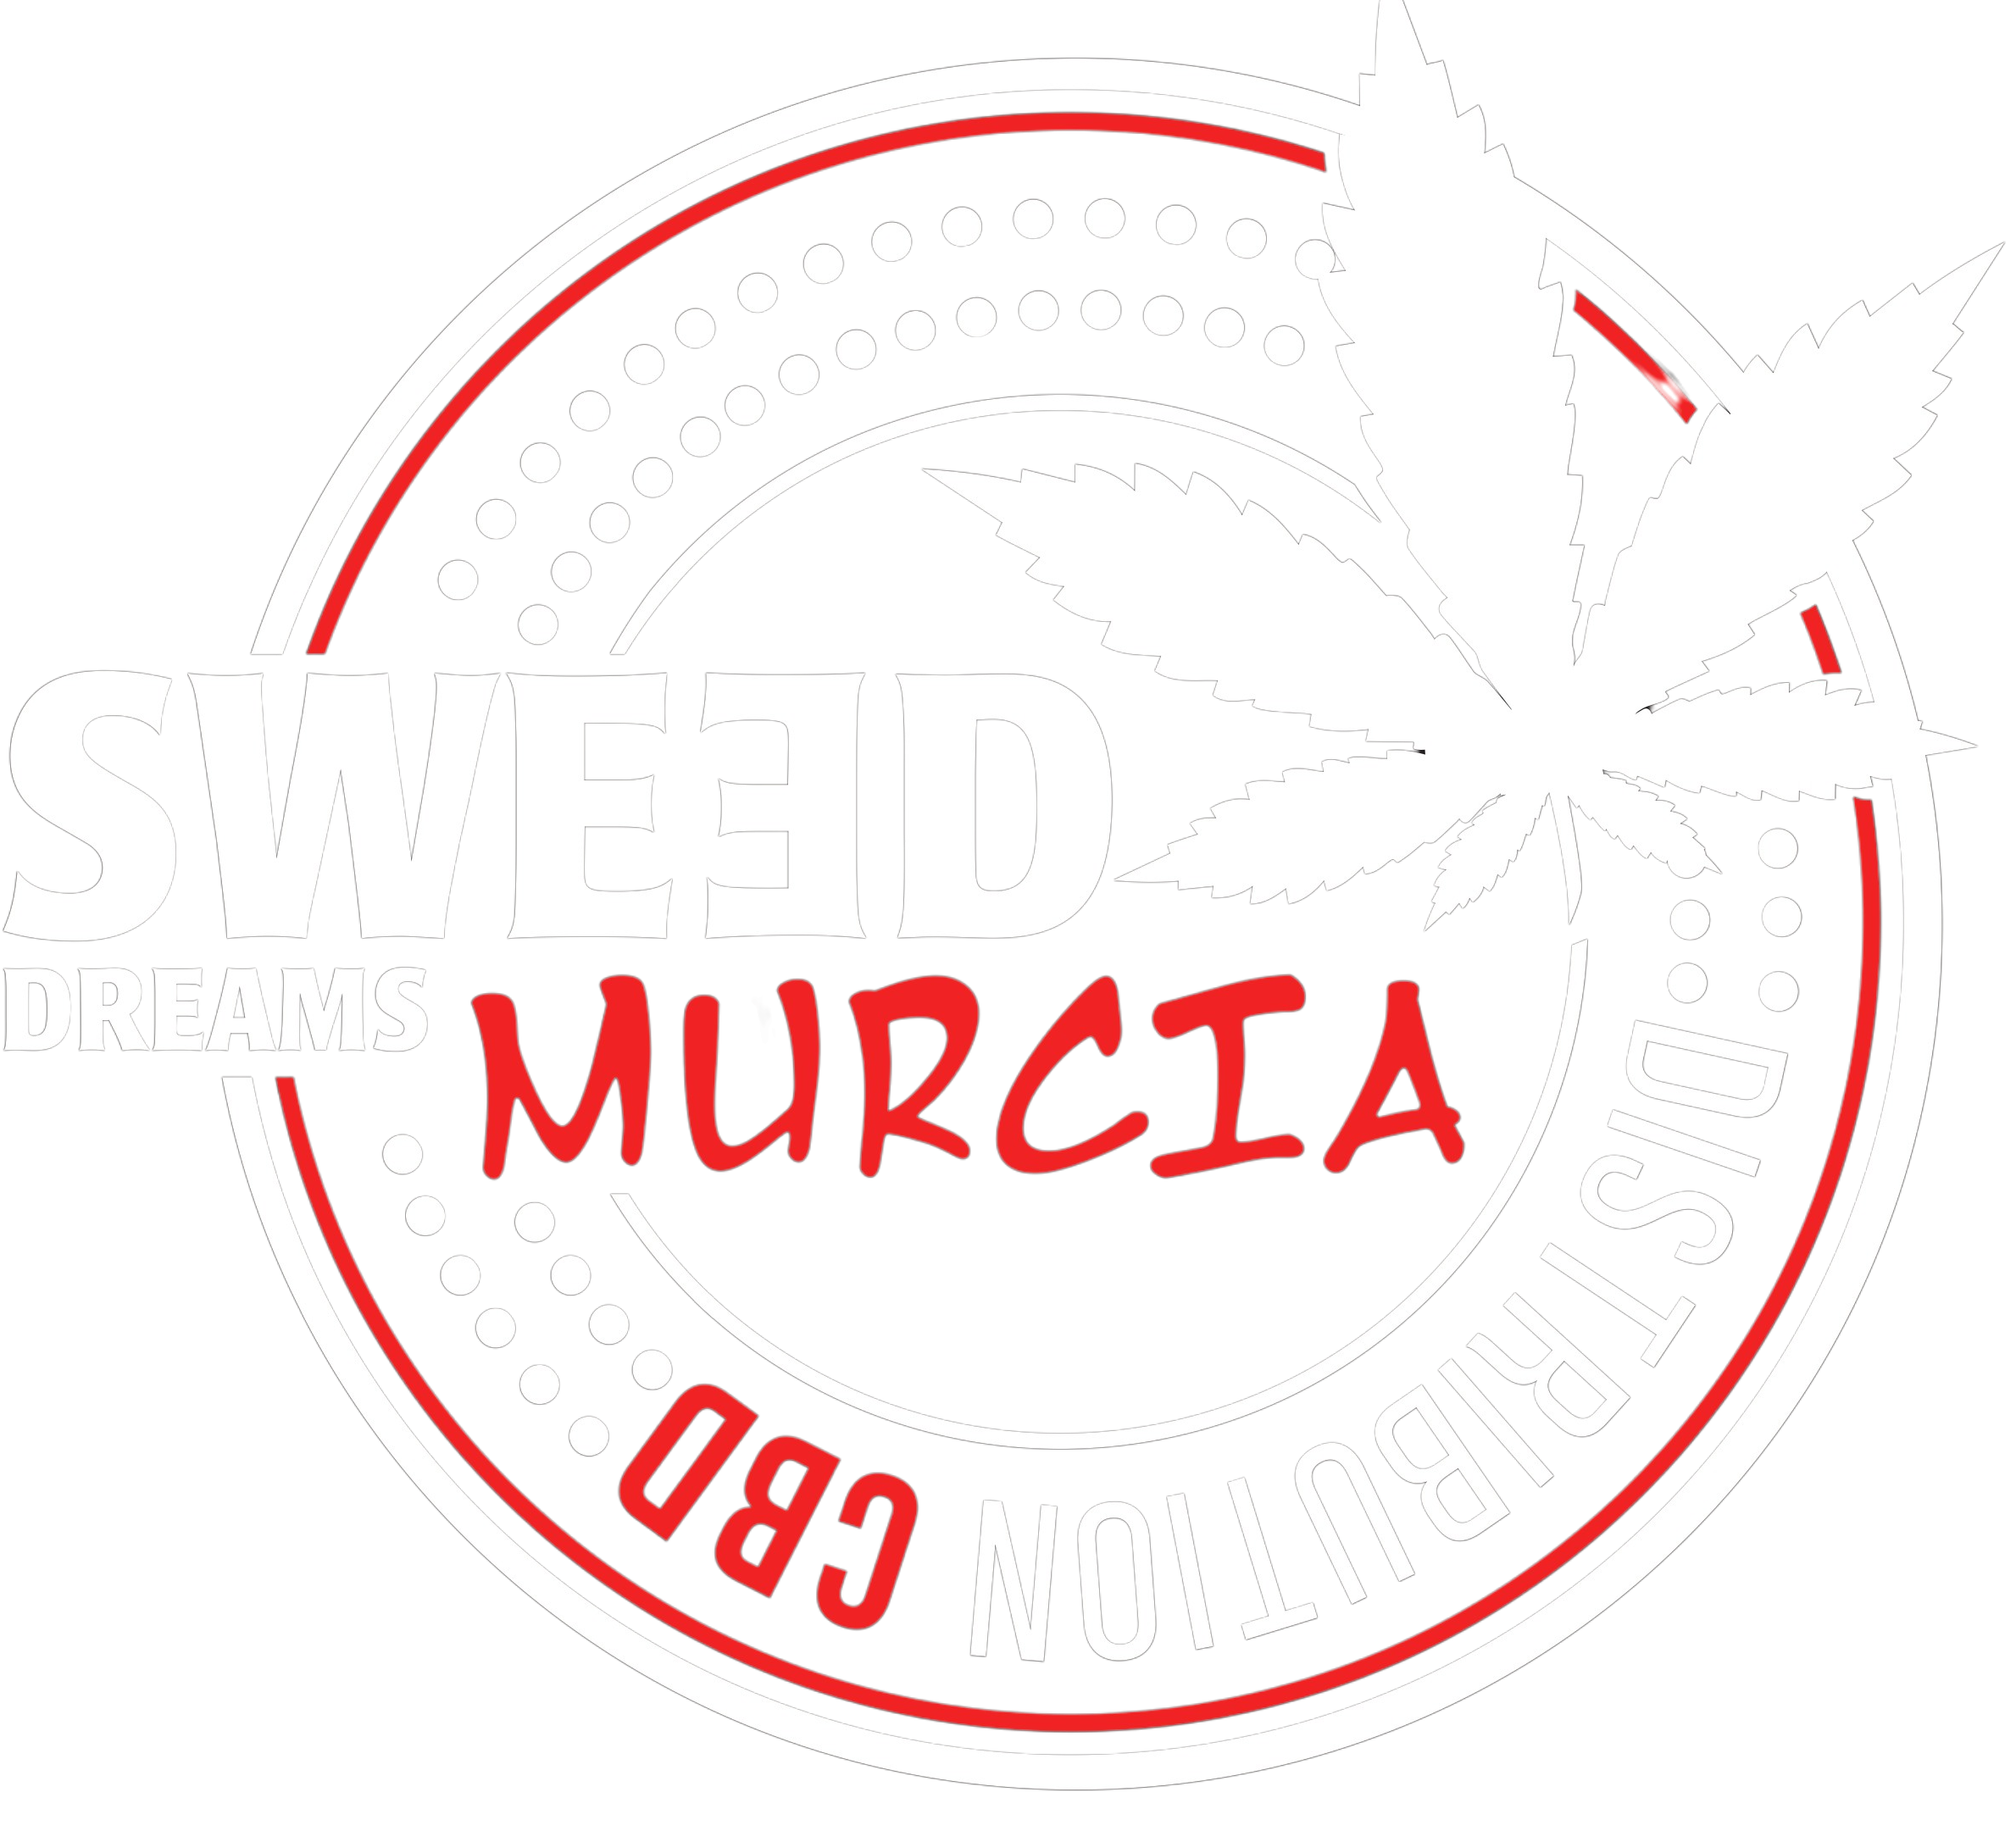 Sweed Dreams CBD Shop Murcia